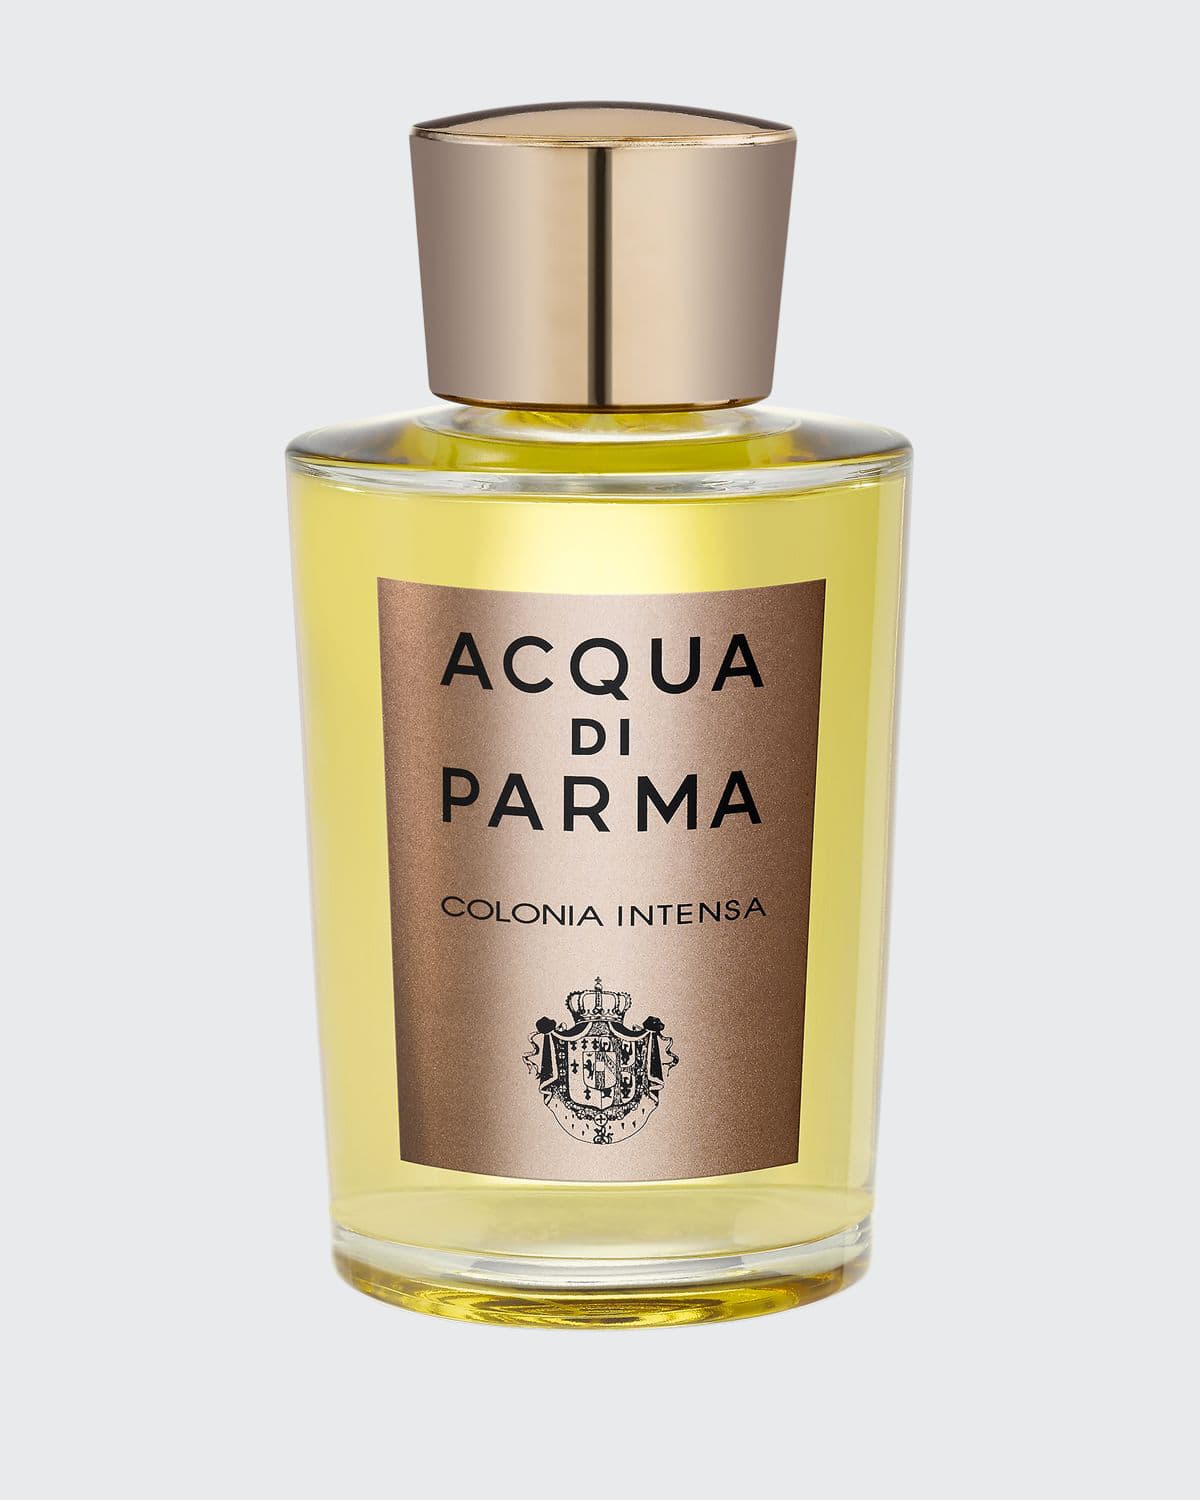 Acqua di Parma Colonia Intensa Eau de Cologne, 6.0 oz.